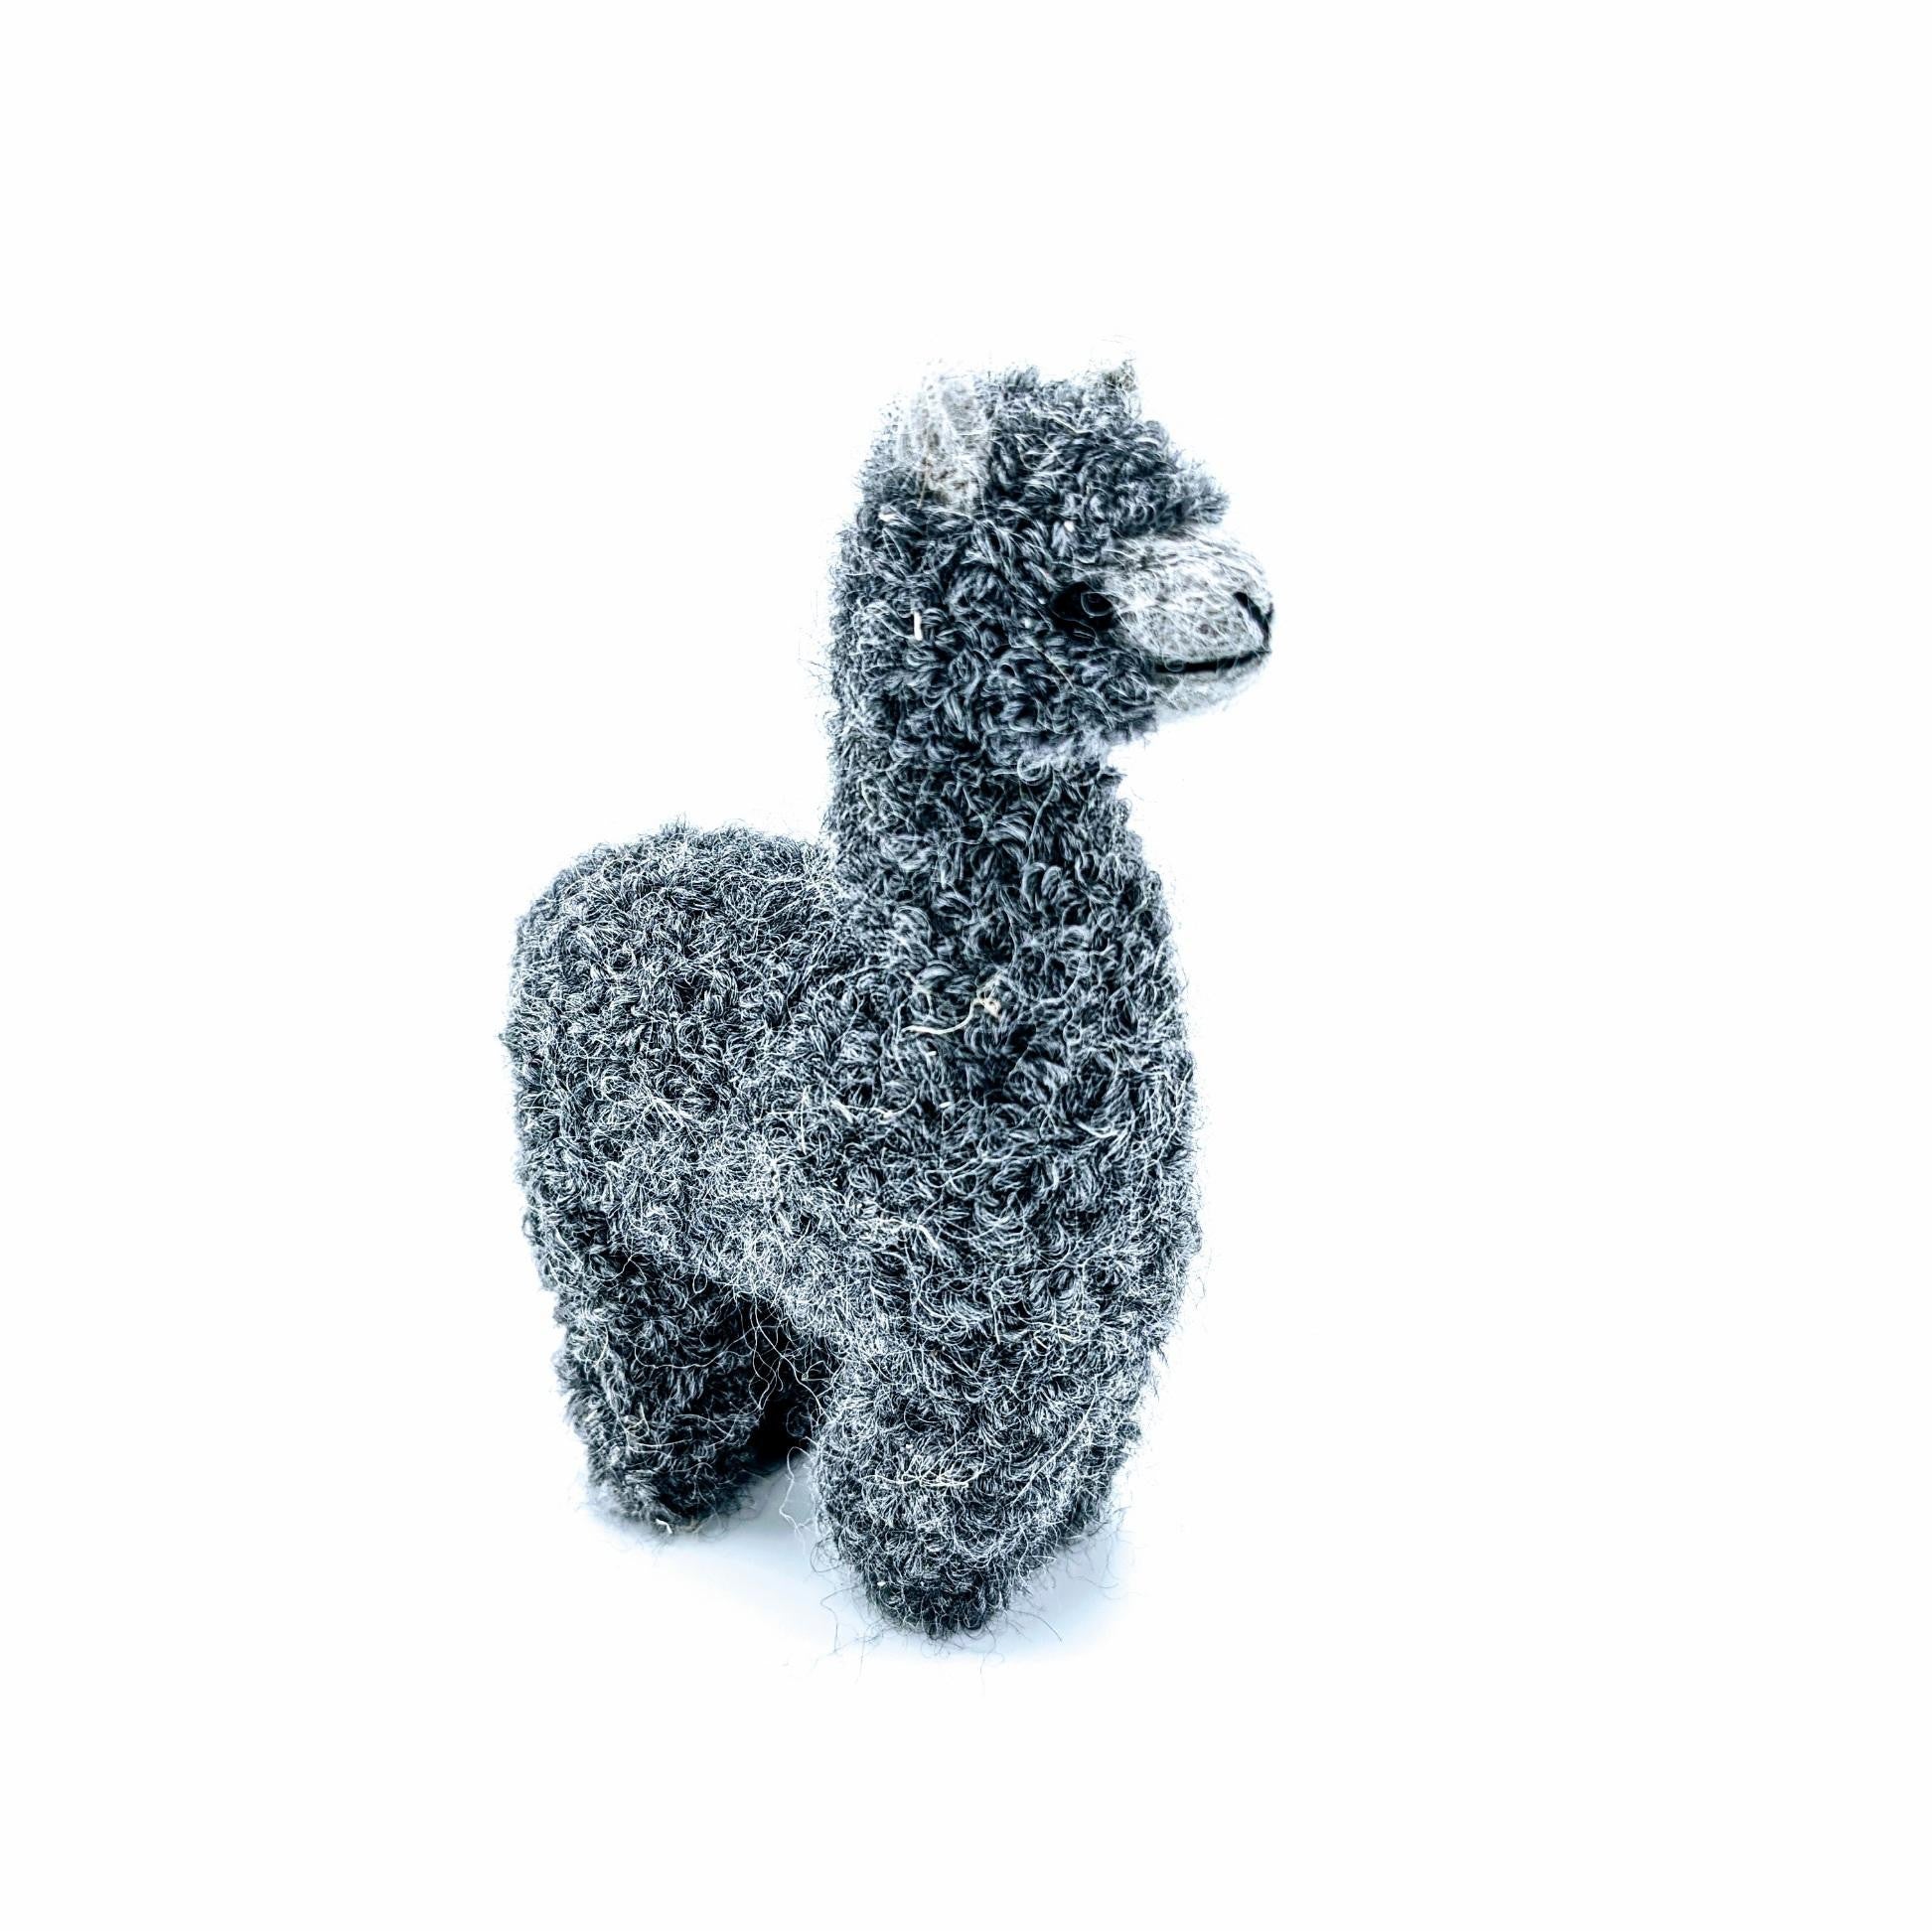 Gray baby alpaca figure